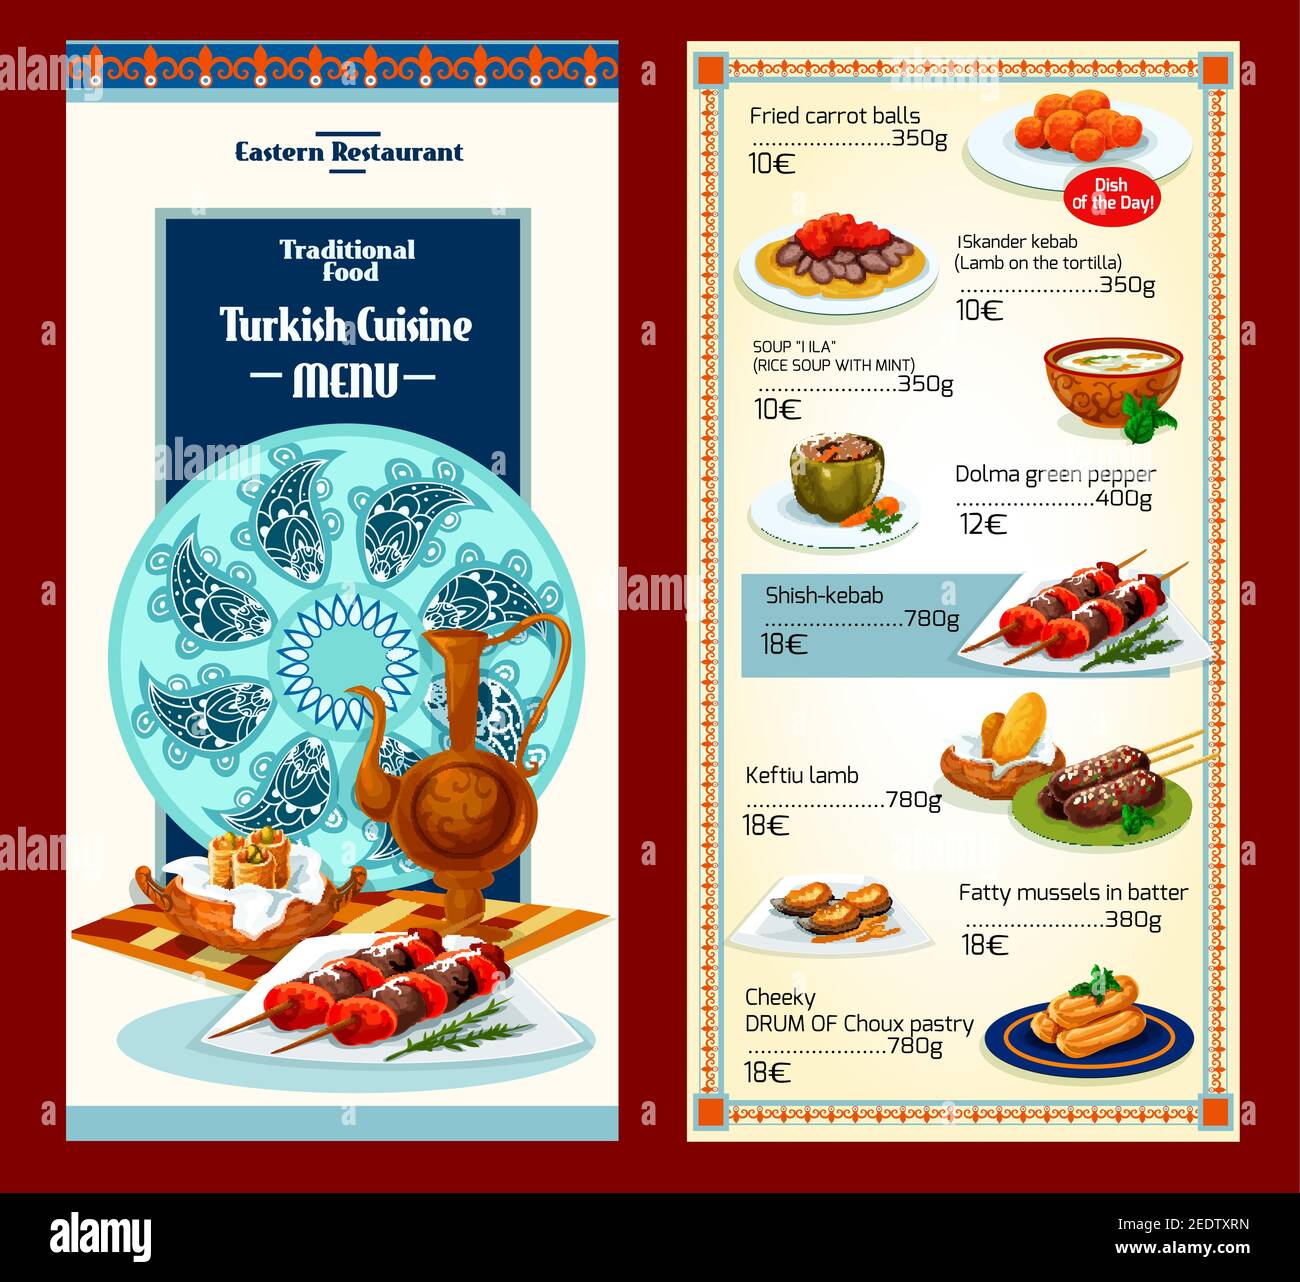 Турецкий ресторан меню. Турецкое меню дизайн. Меню турецкой кухни для ресторана. Меню ресторана в Турции. Меню в турецком стиле.